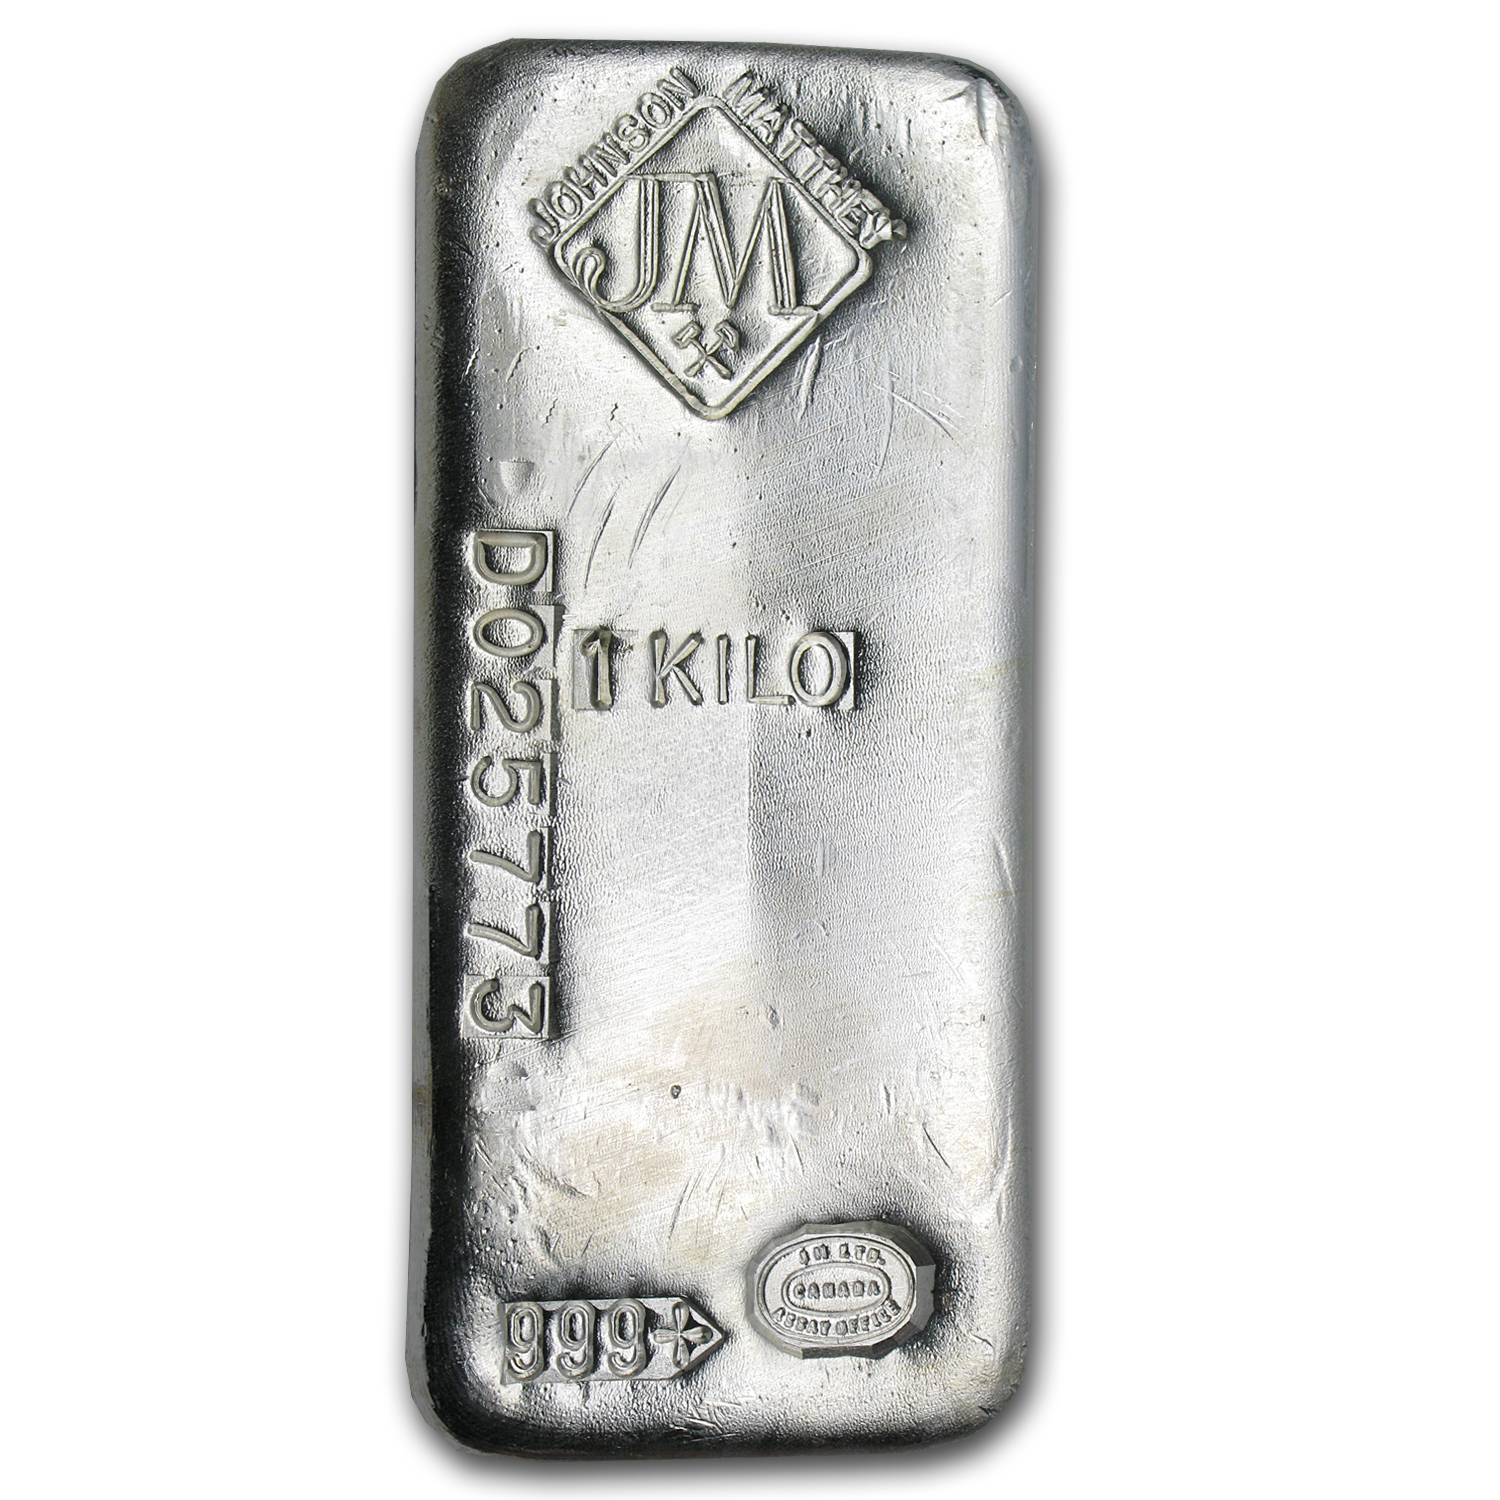 johnson matthey 1 oz silver bar serial number